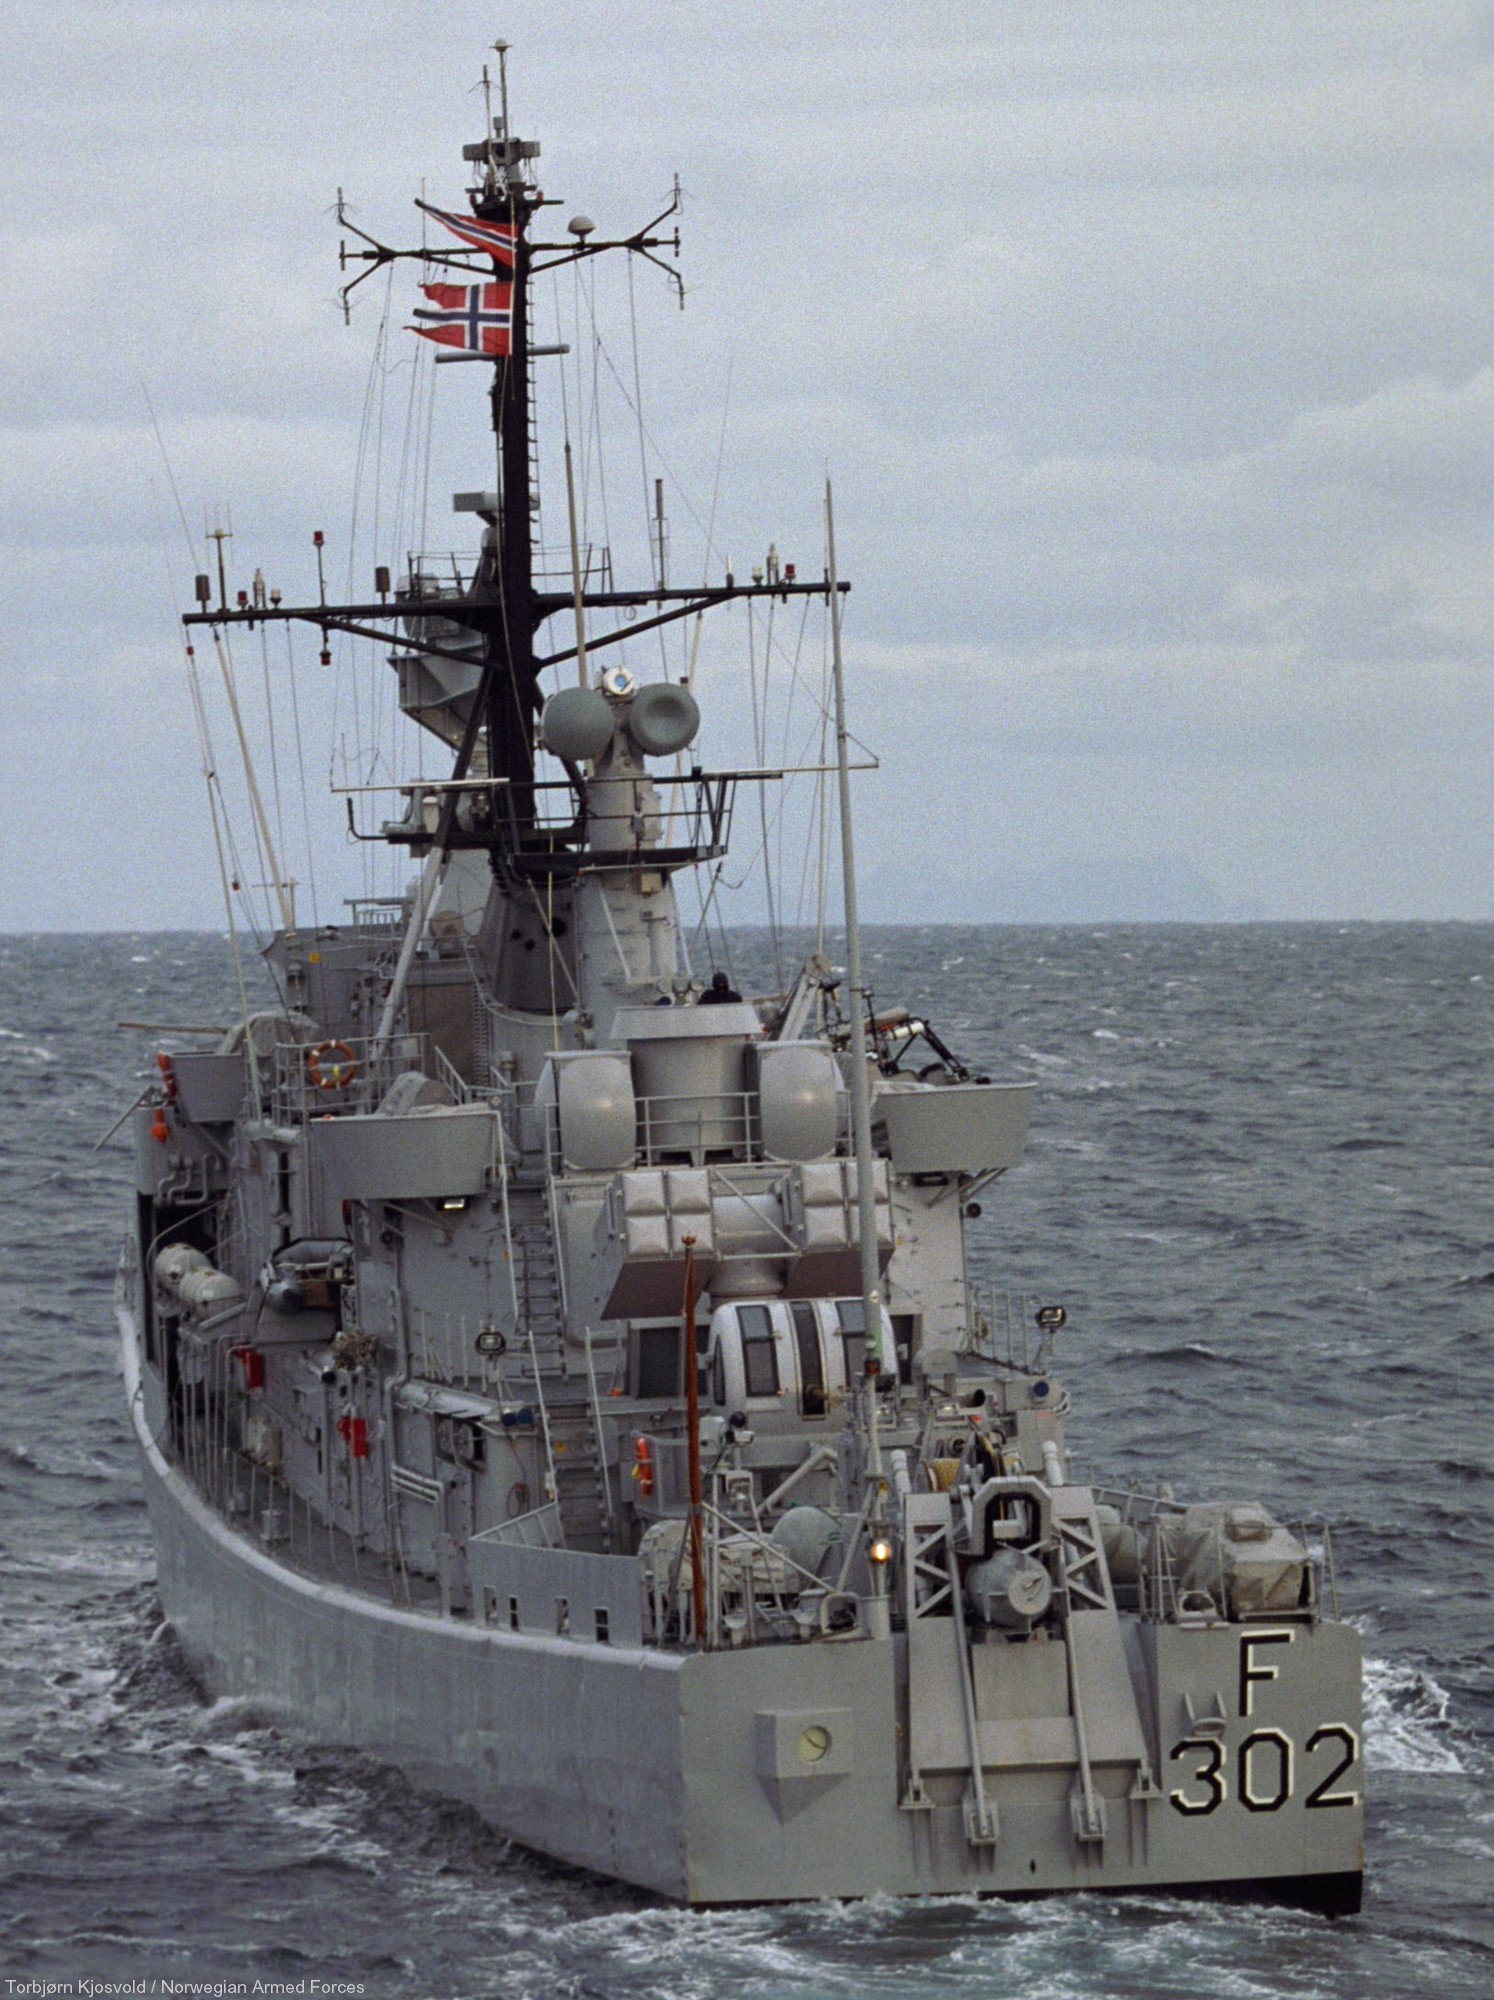 f-302 hnoms trondheim knm oslo class frigate royal norwegian navy sjoforsvaret 13